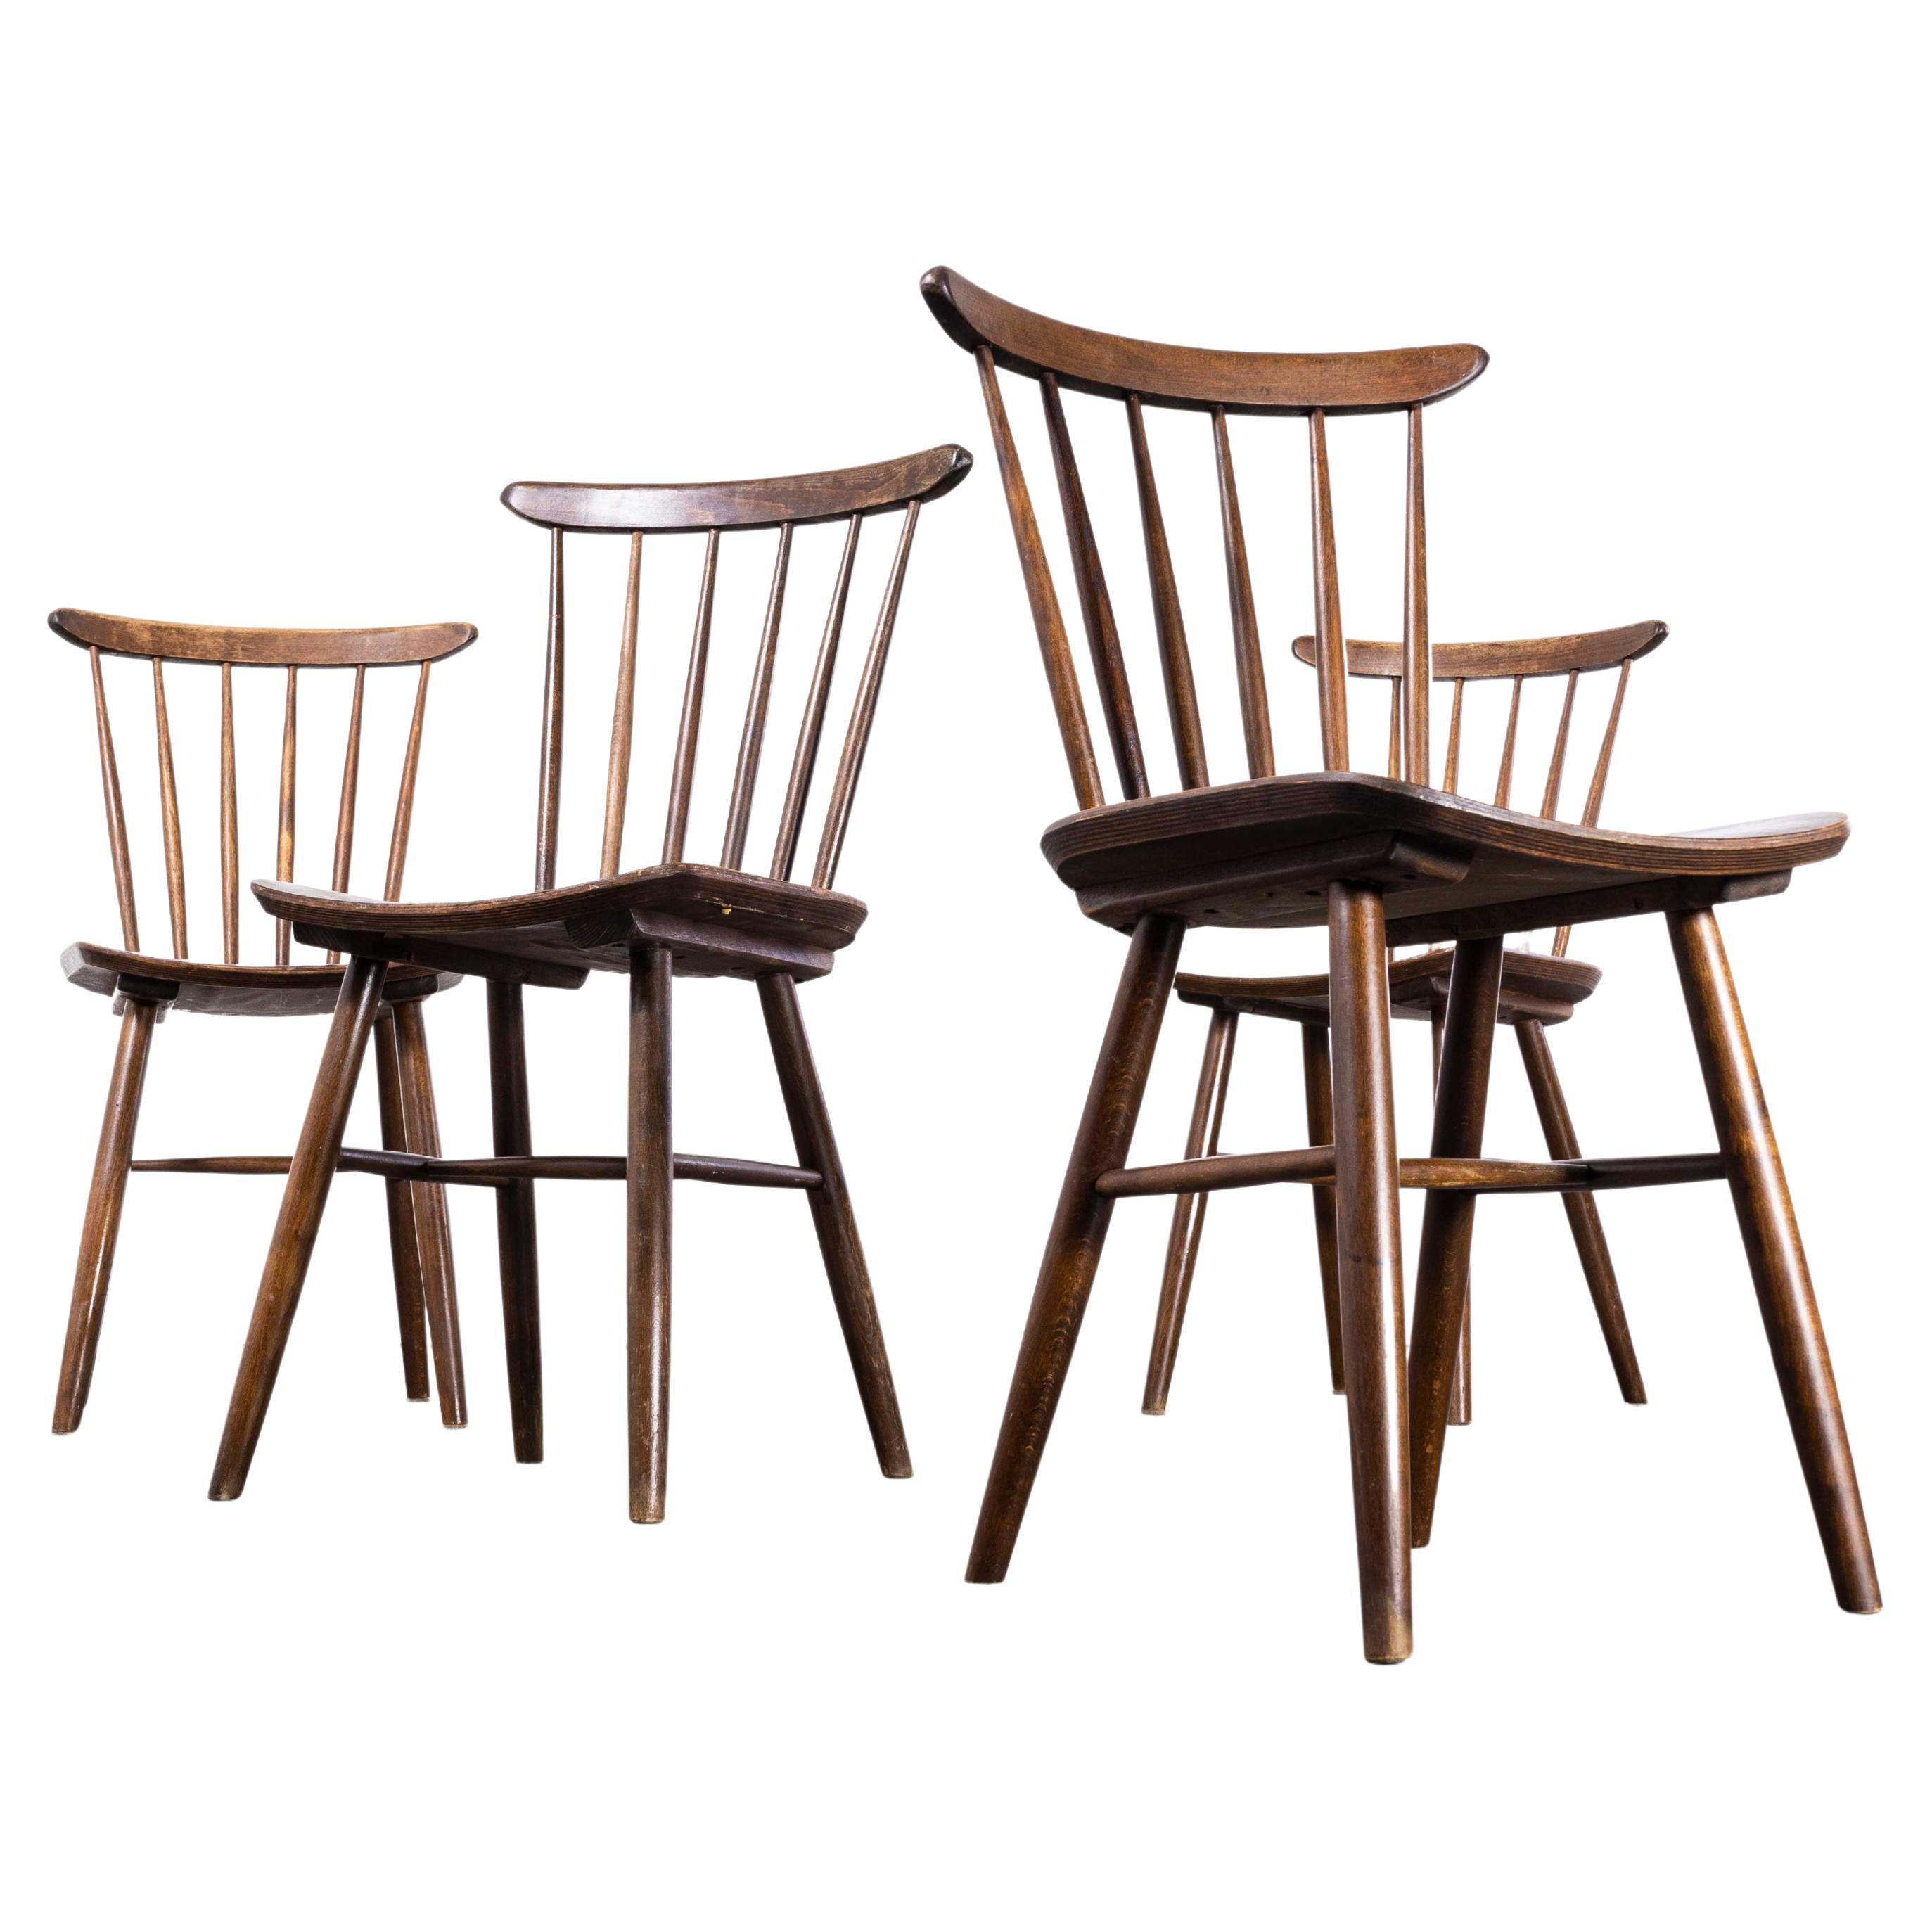 1950s Dark Walnut Stickback Chairs, Saddle Seat, by Ton, Set of Four